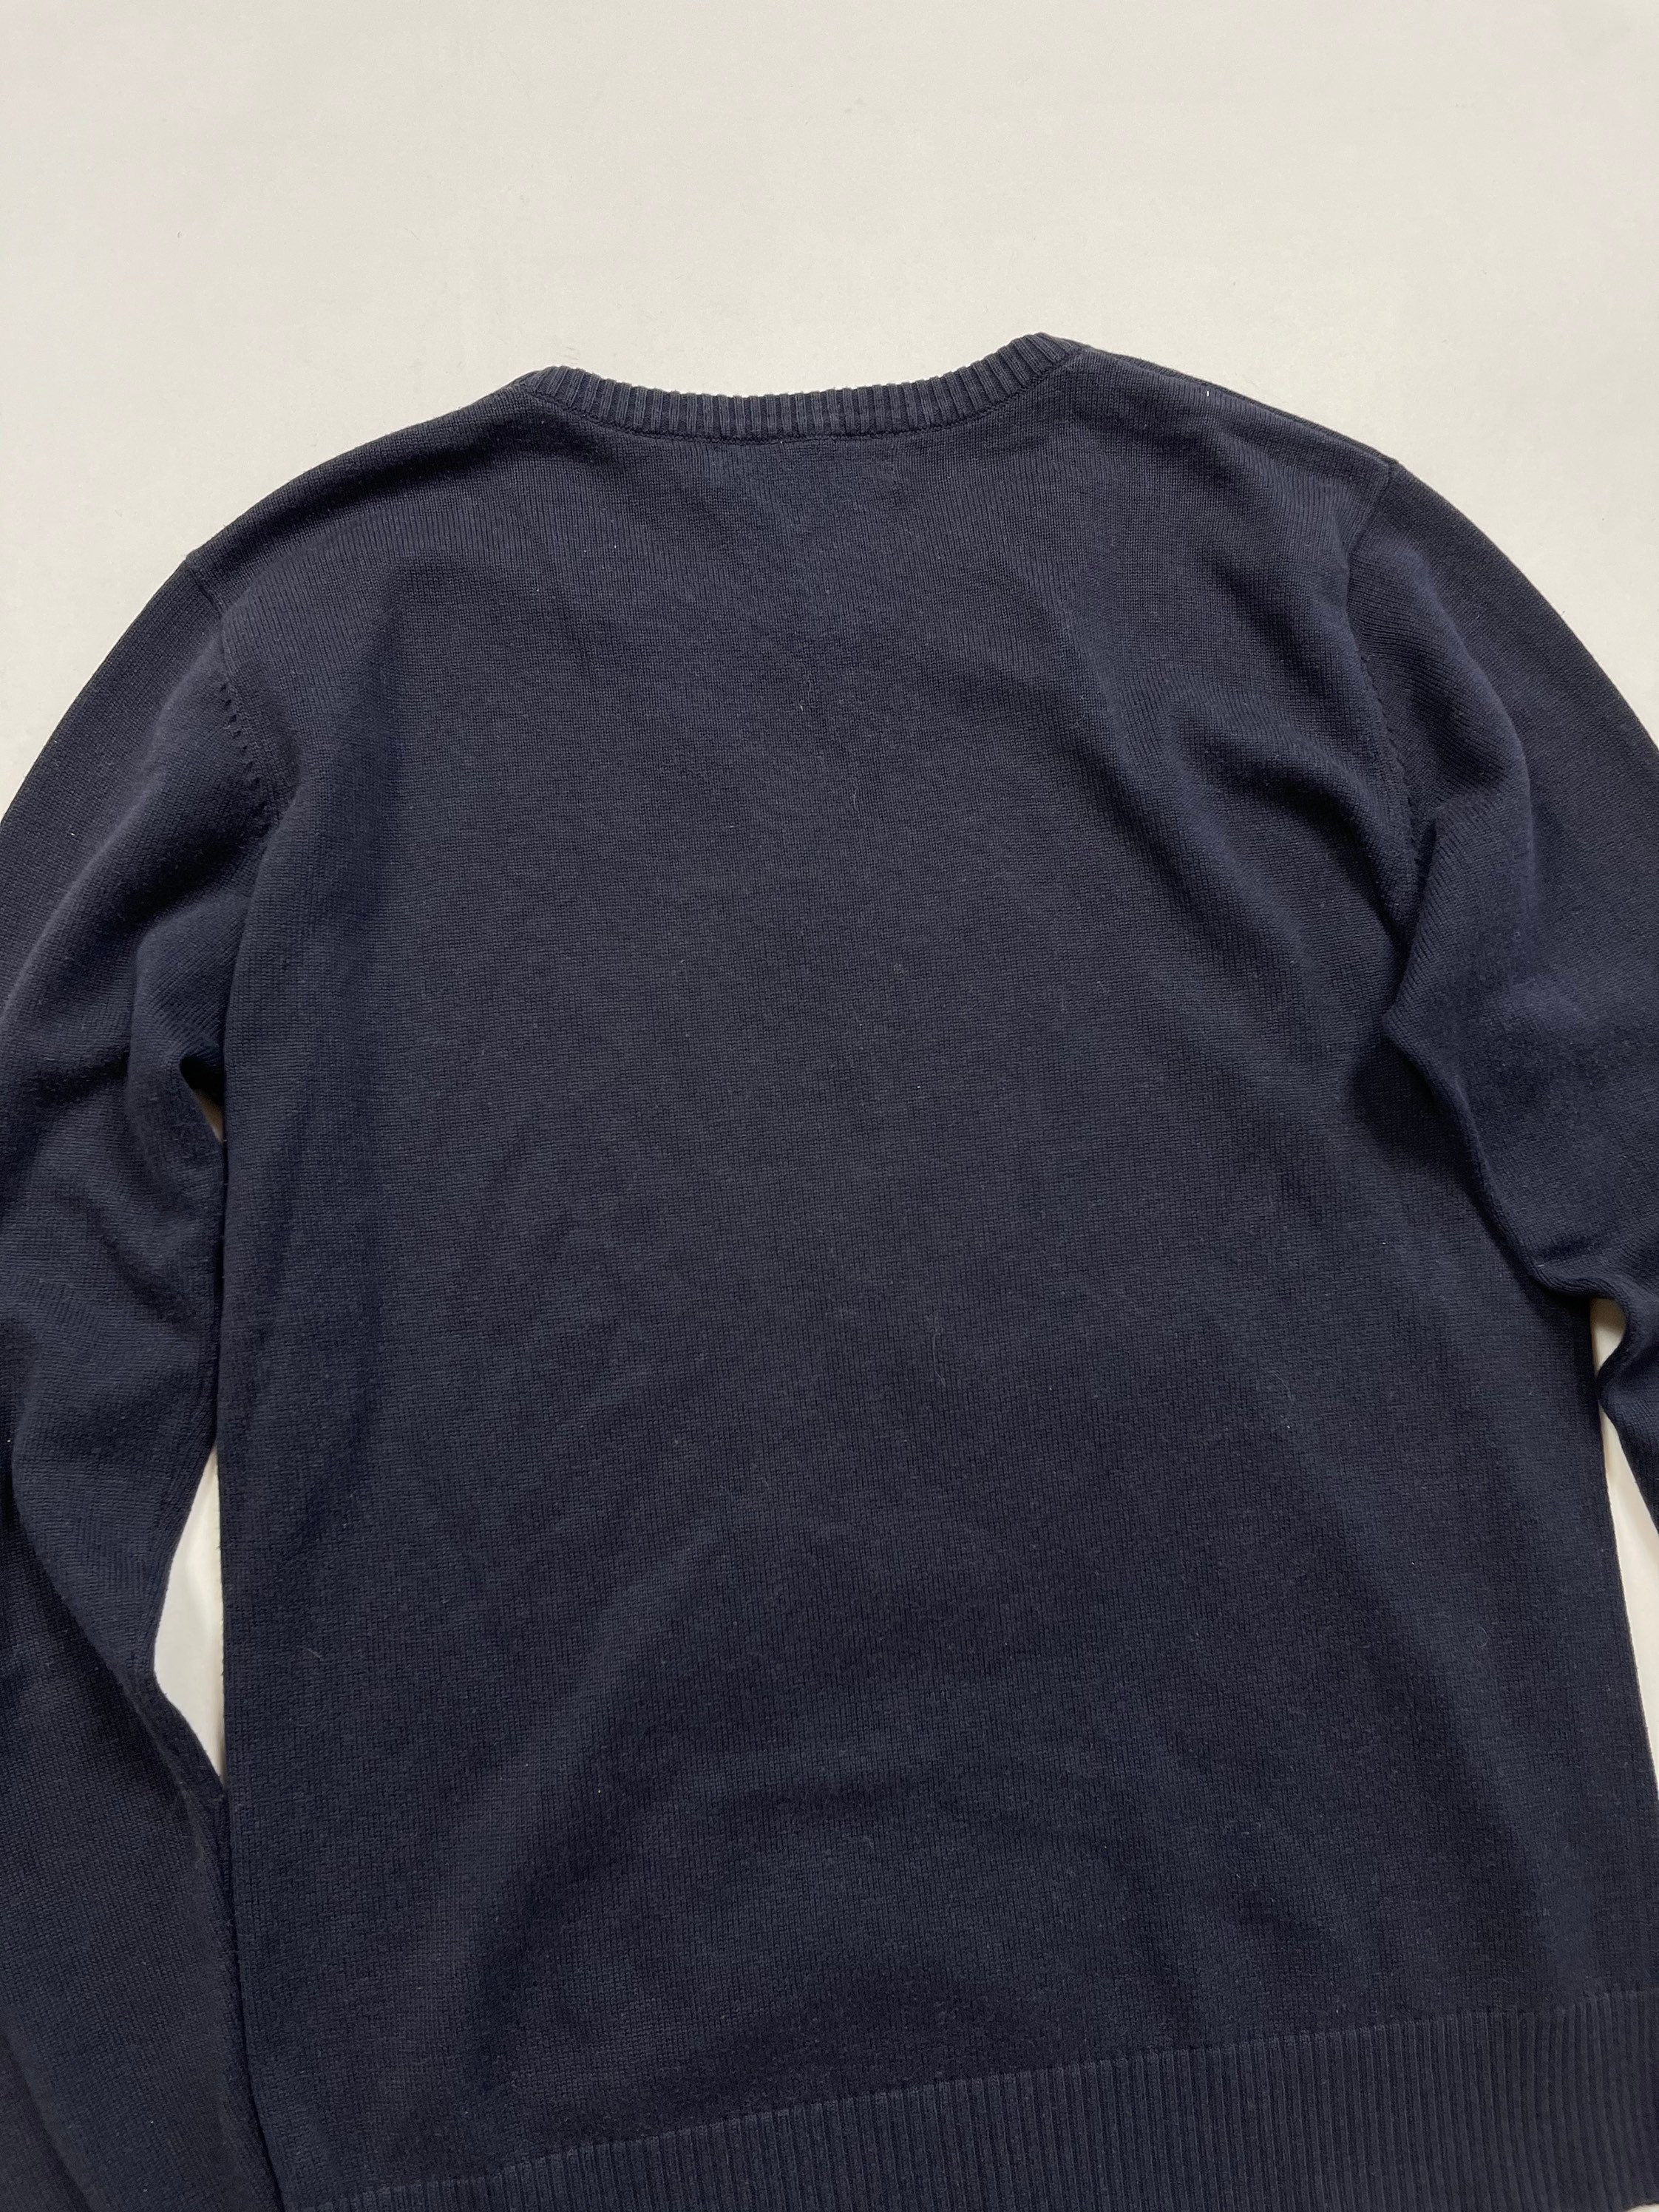 Yves saint Laurent YSL sweater | Etsy